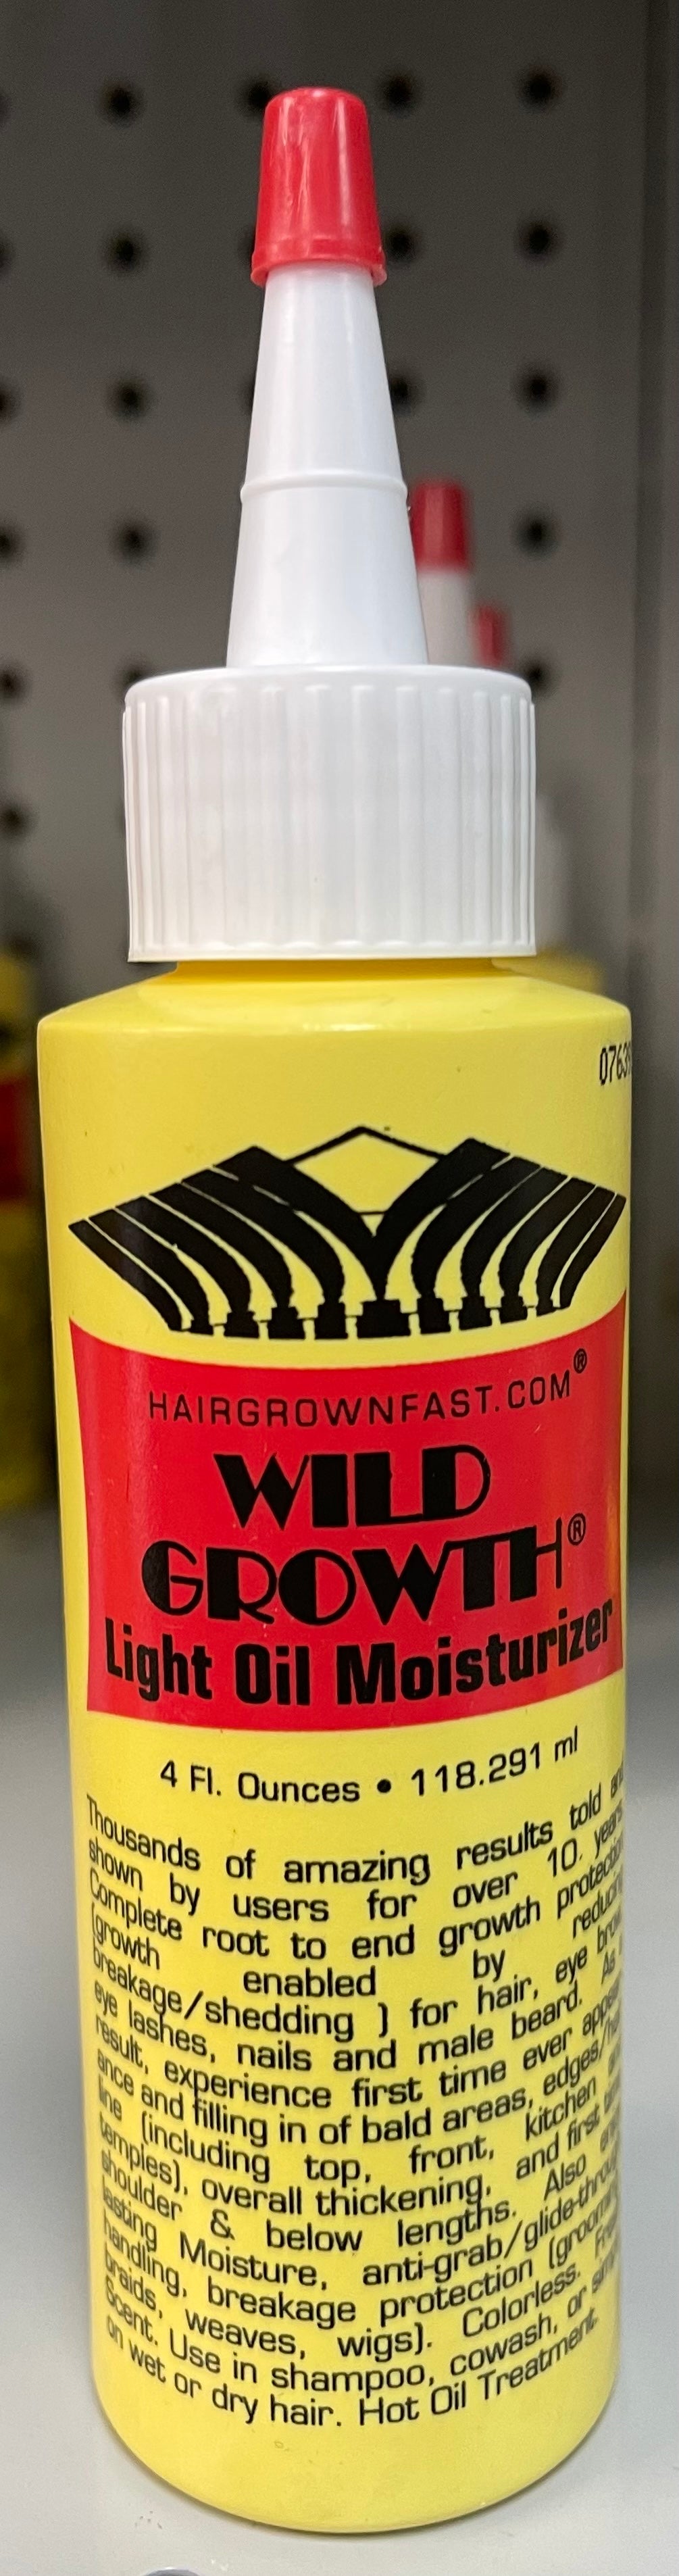 Wild Growth Light Oil Moisturizer